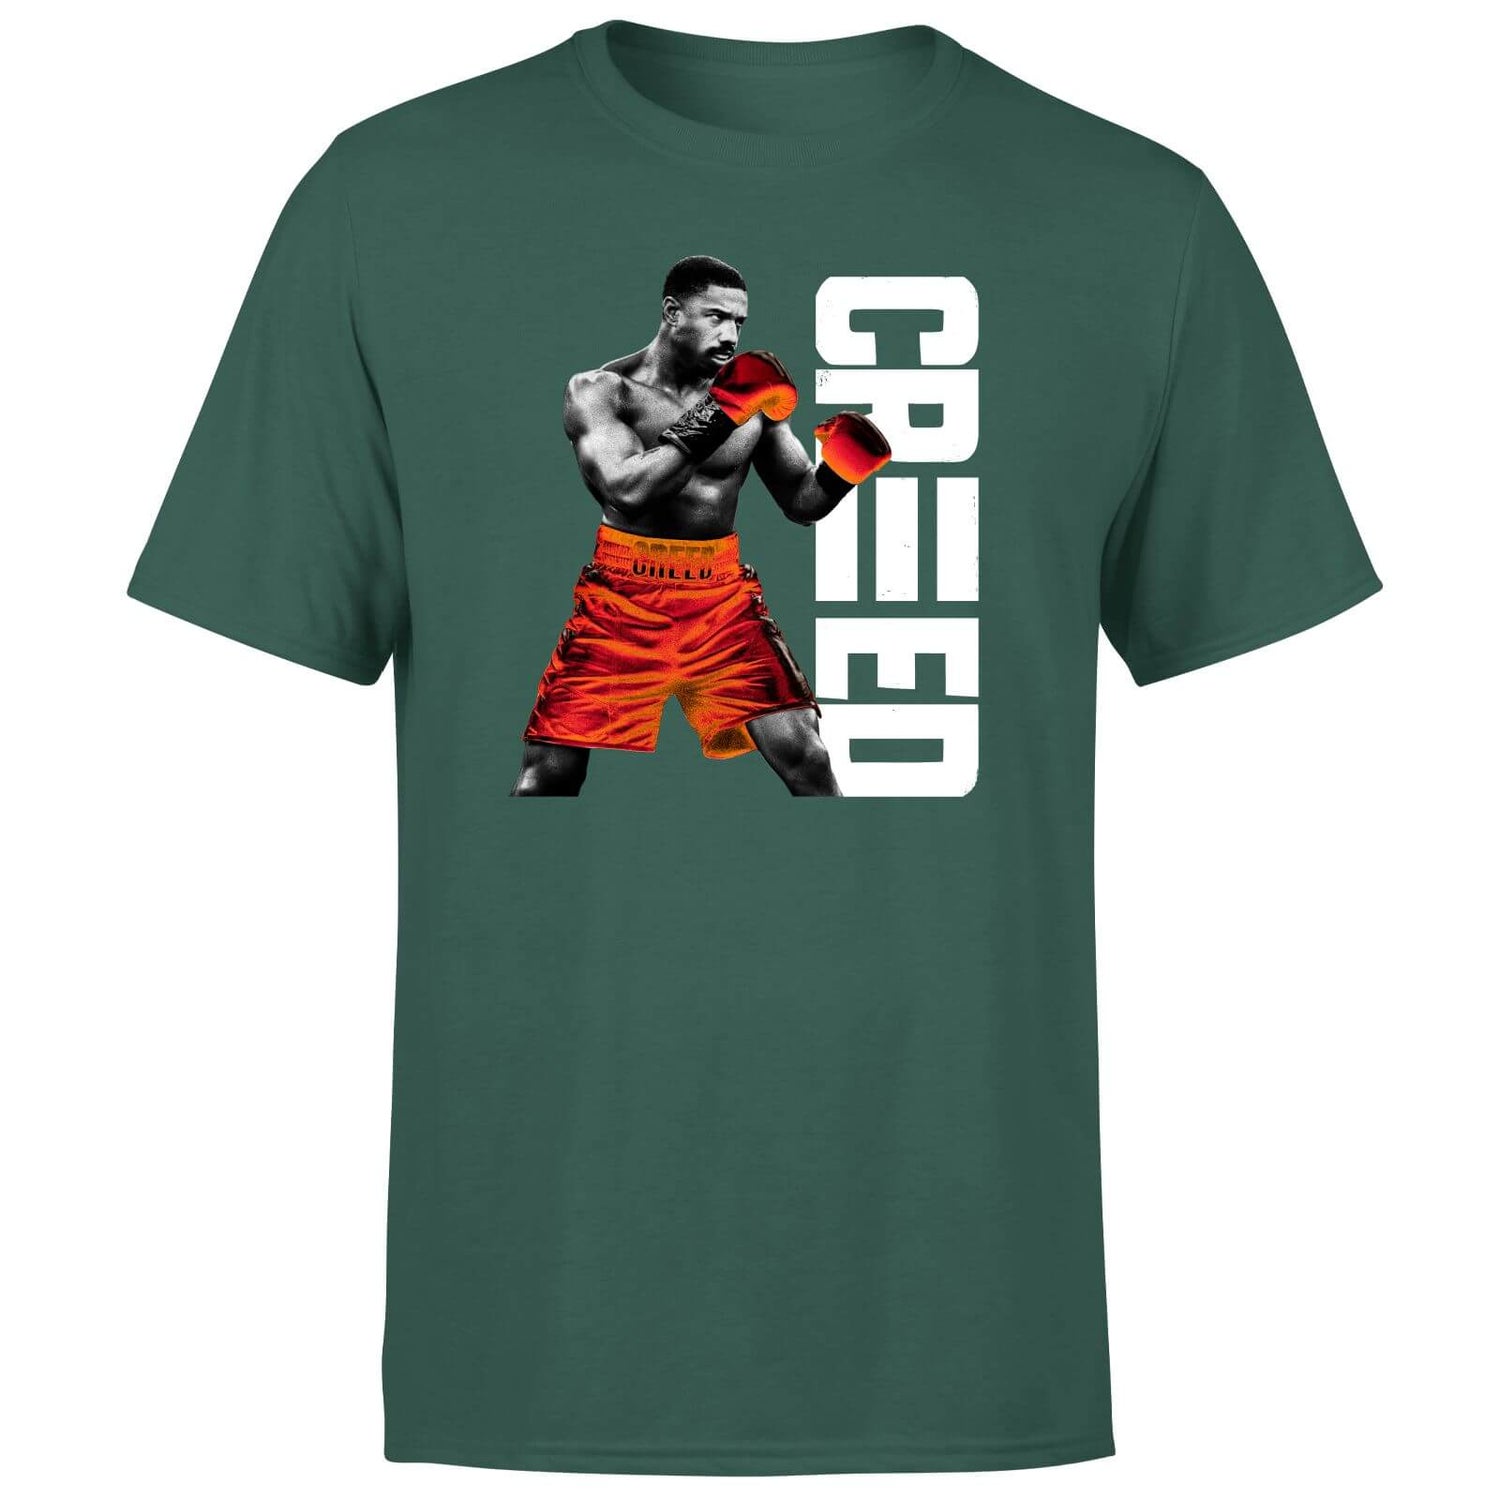 Creed CRIIID Men's T-Shirt - Green